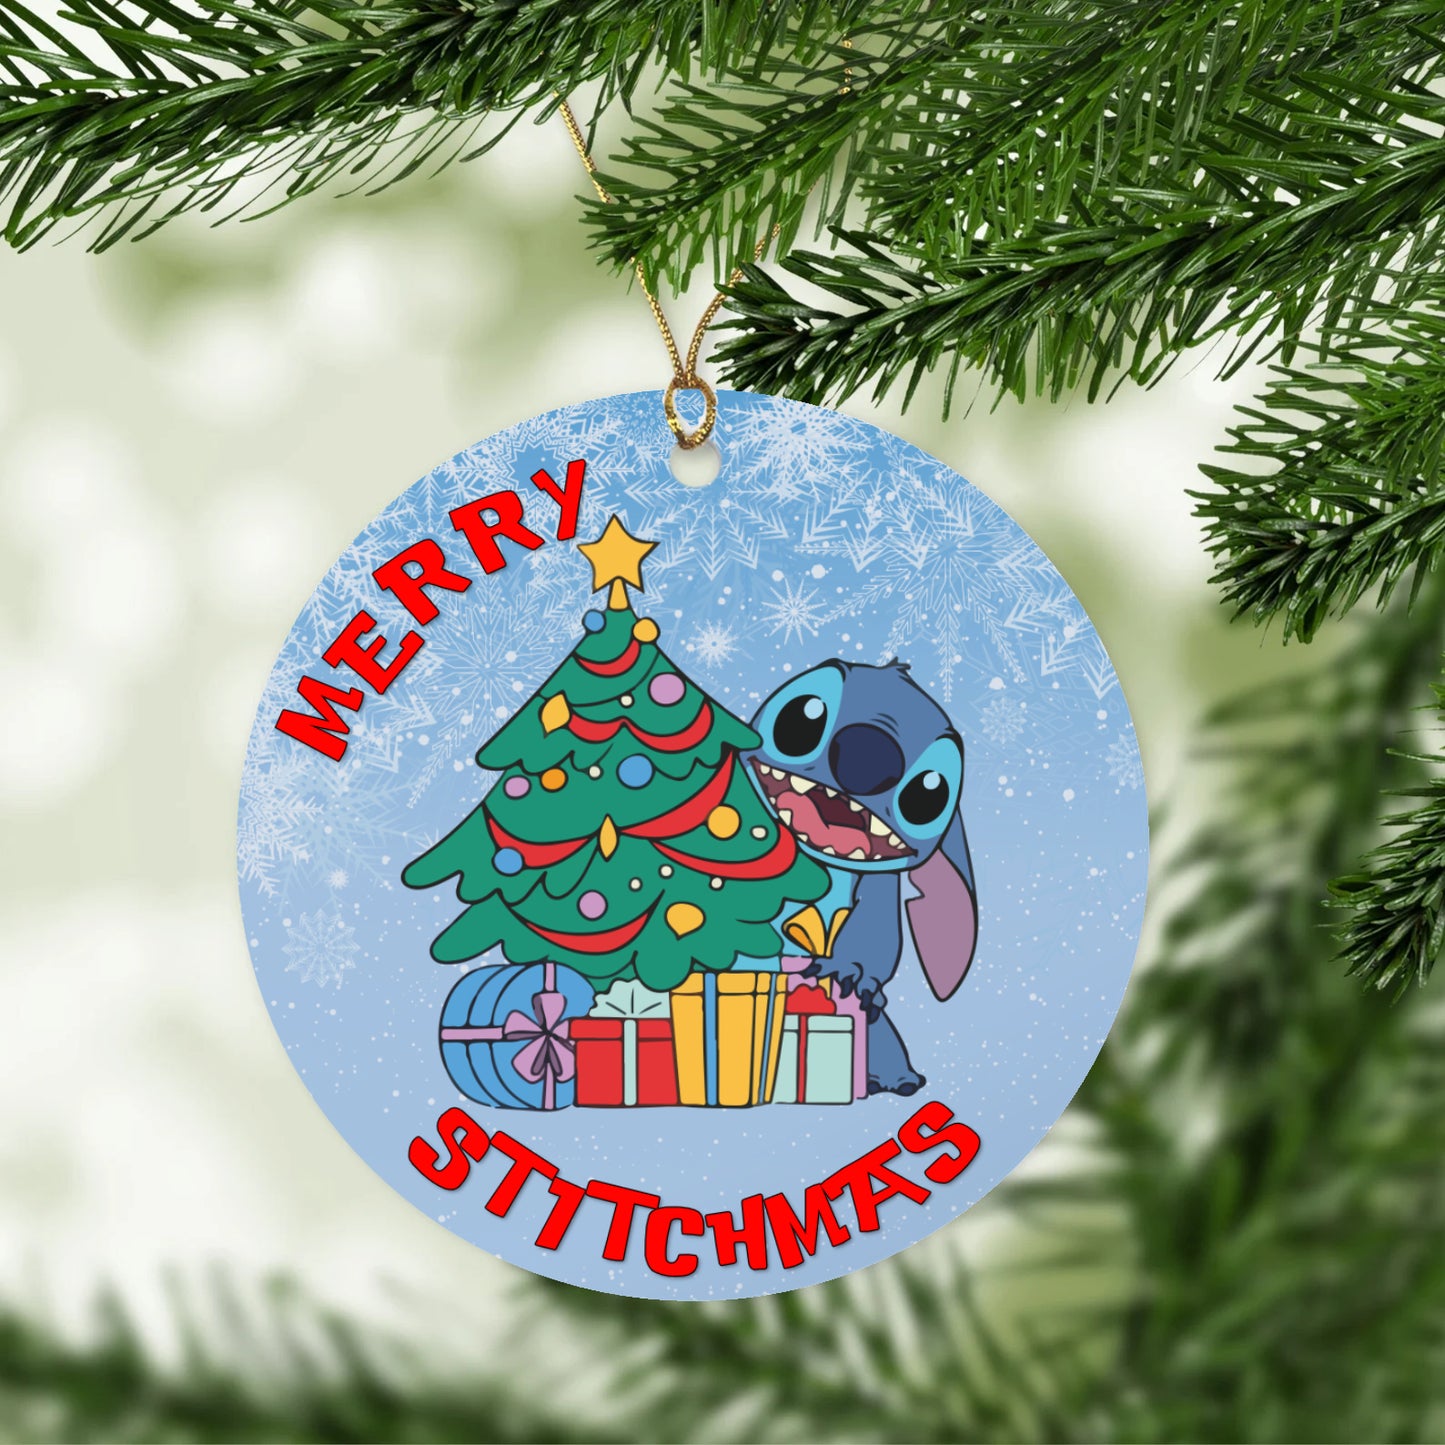 'Merry Stitchmas' Christmas Tree Ornament